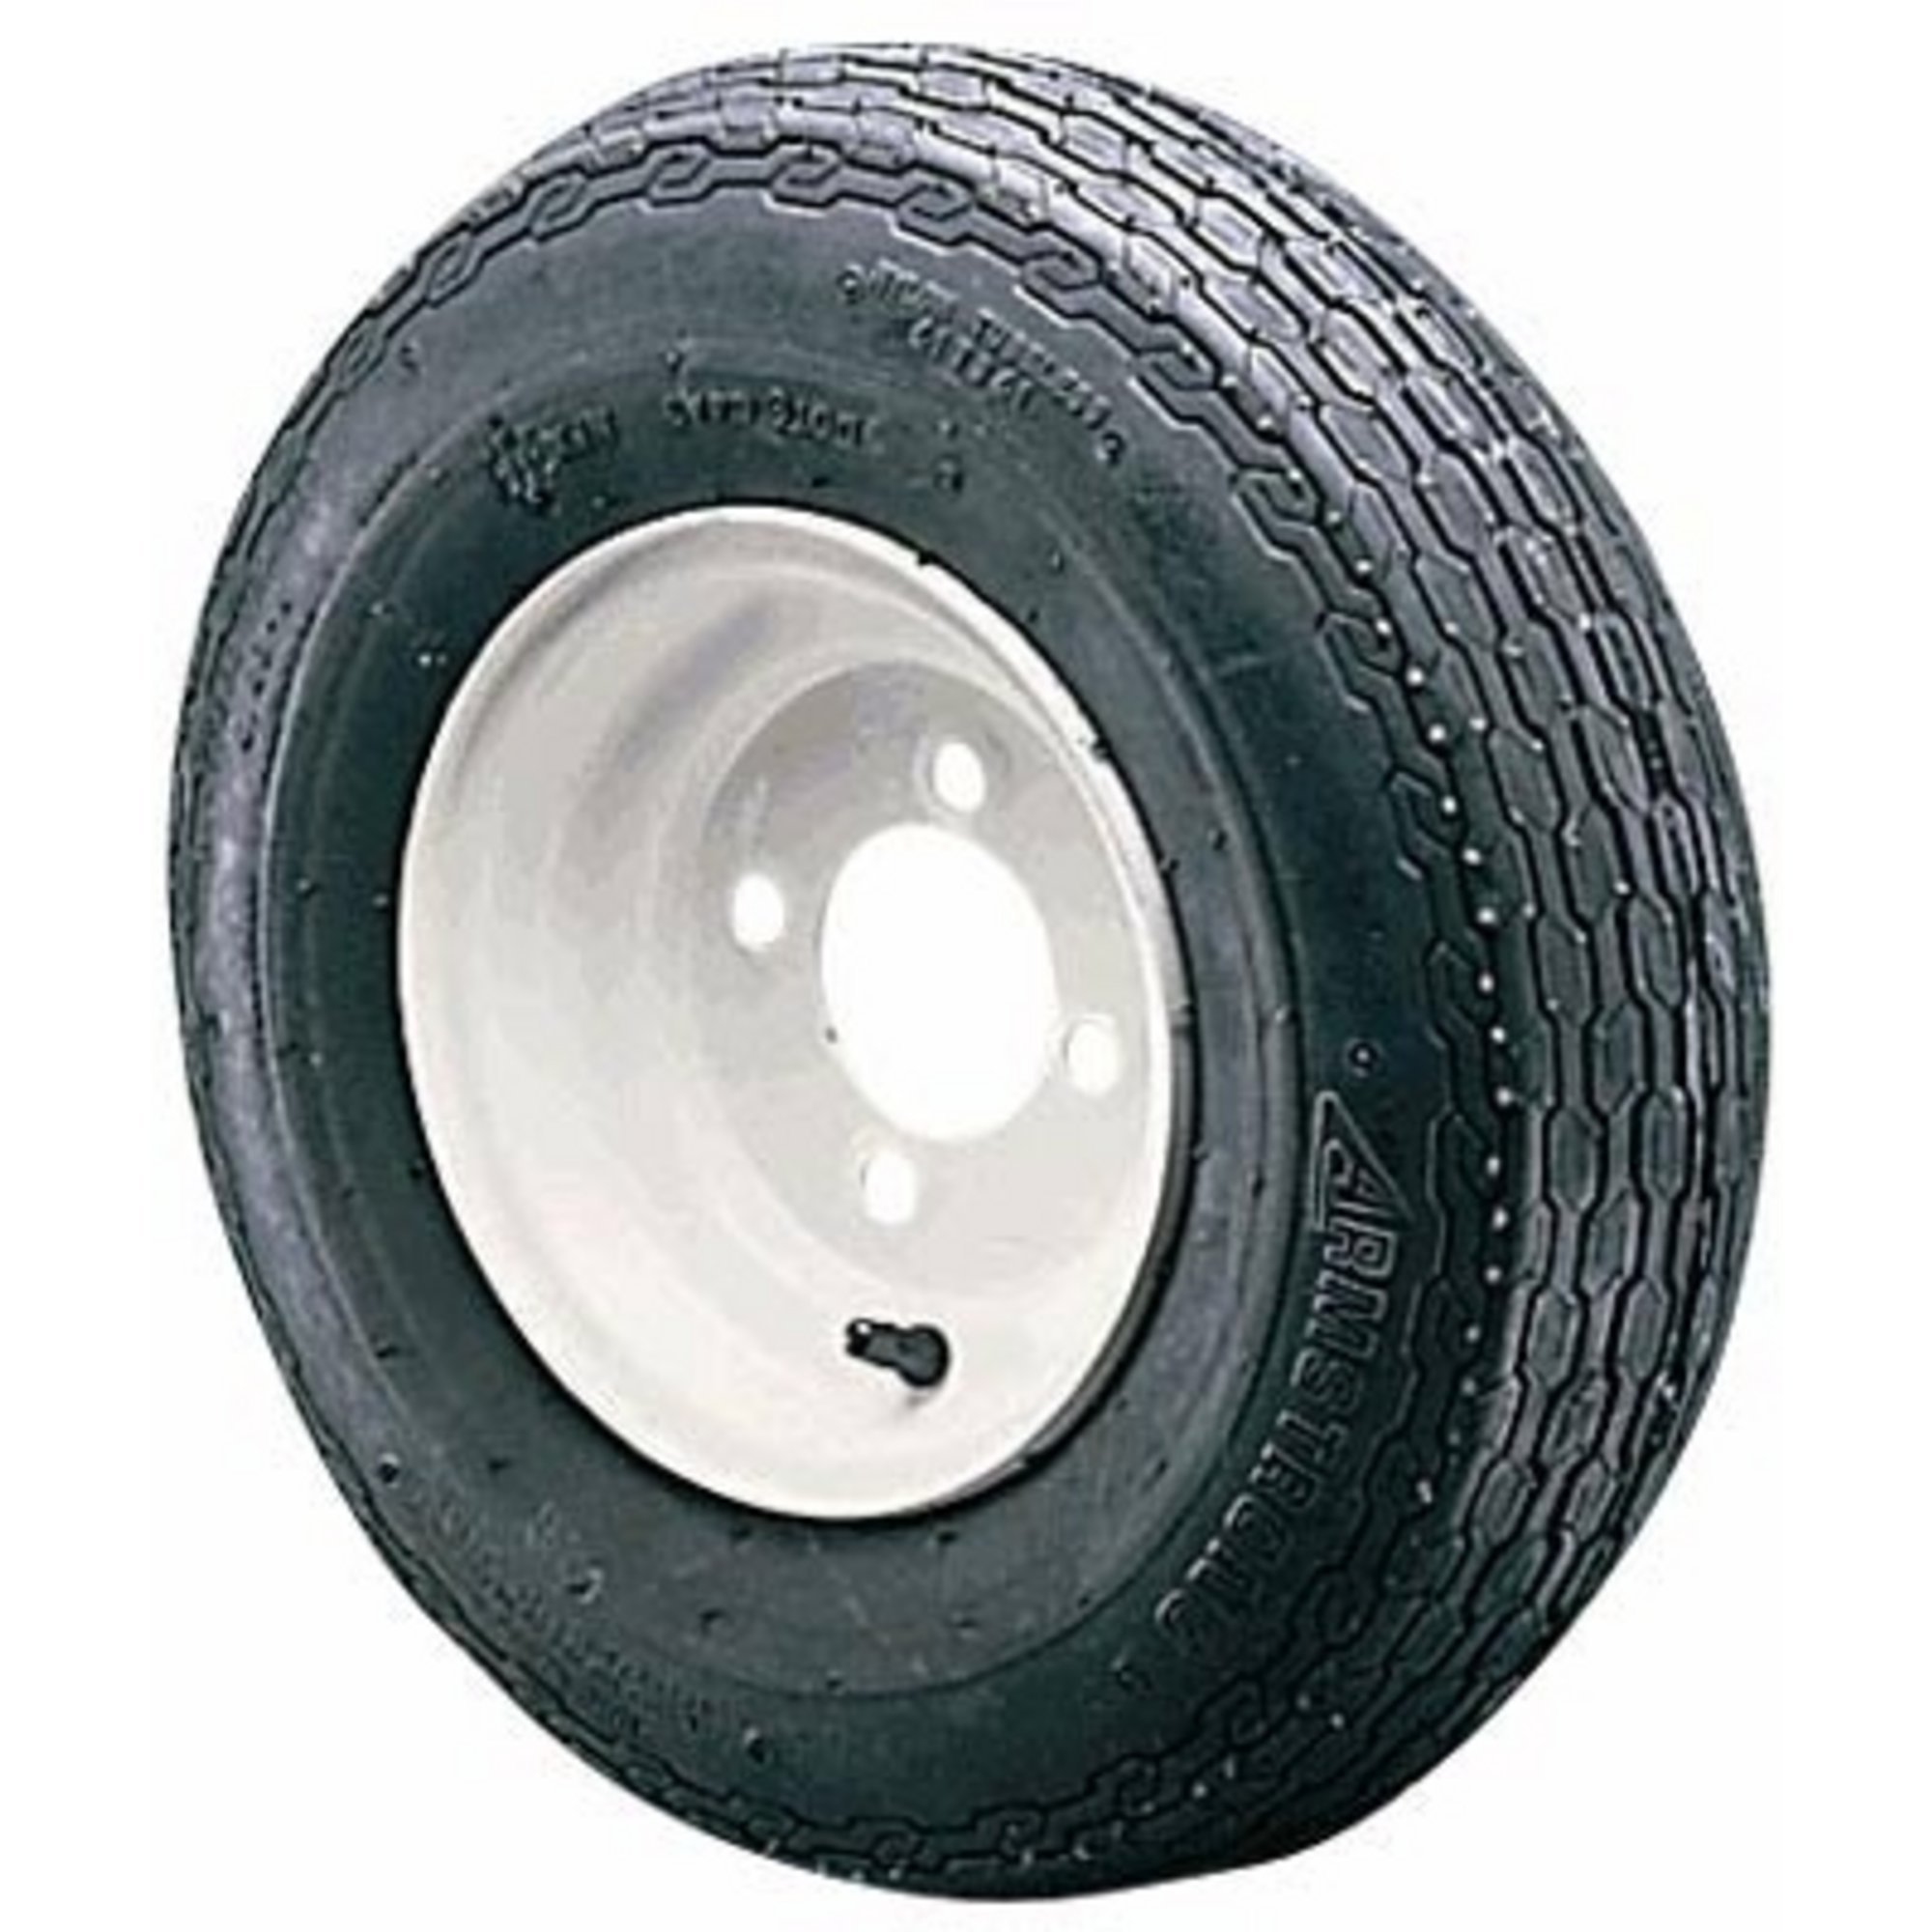 Kenda Loadstar 9Inch Trailer Tire and Wheel Assembly â 690/600-9, 5-Hole, Load Range C, Model DM609C-5I